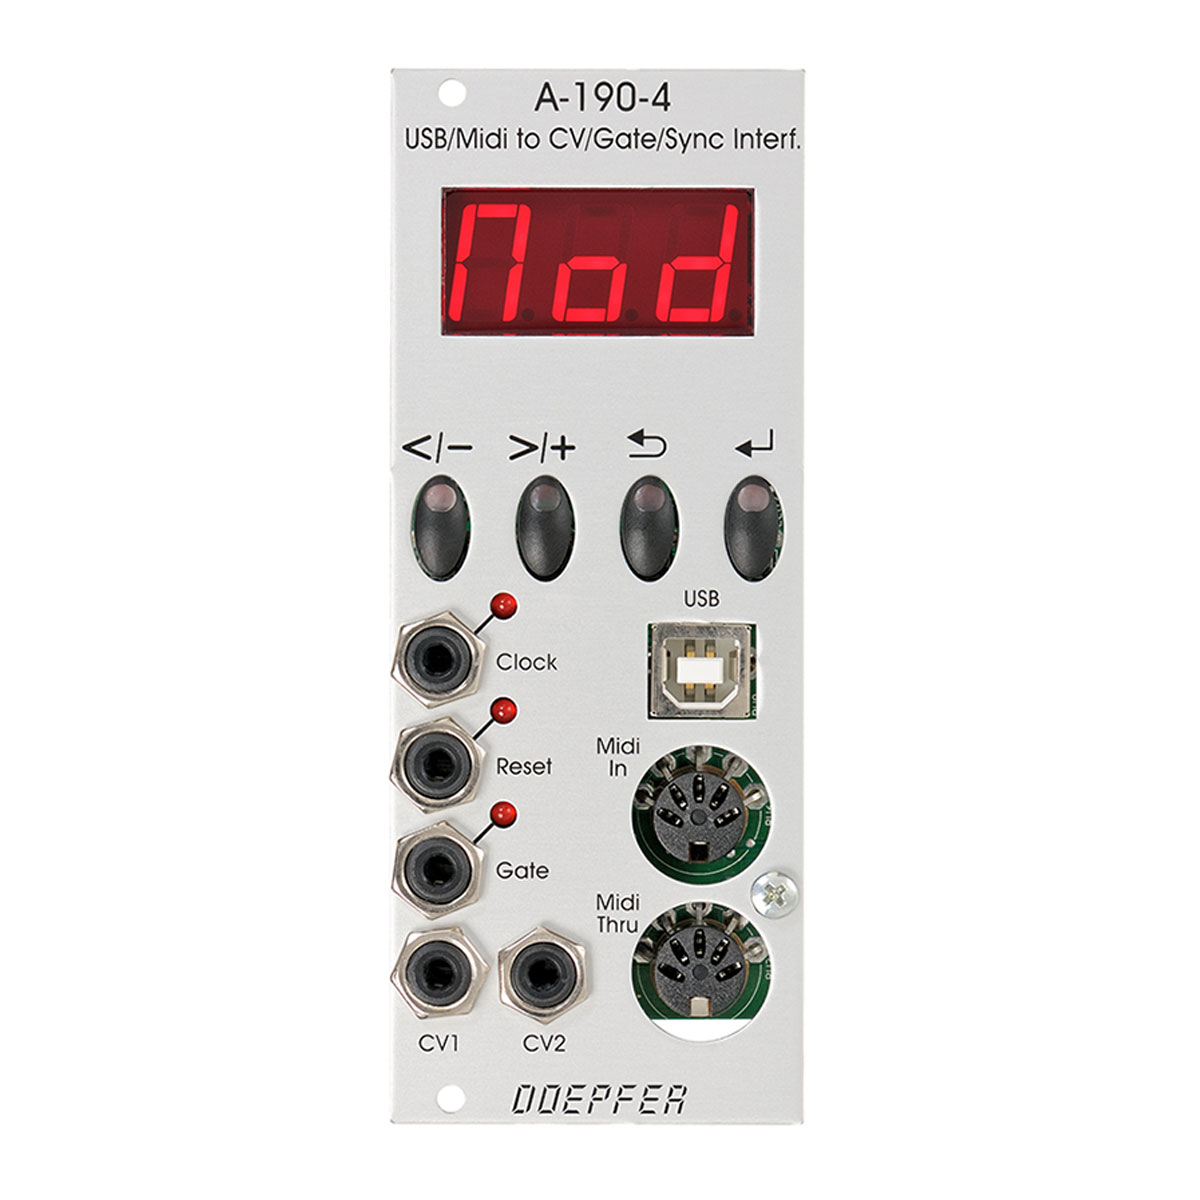 A-190-4 USB/MIDI to CV/Gate/Sync Interface - A-100 Eurorack